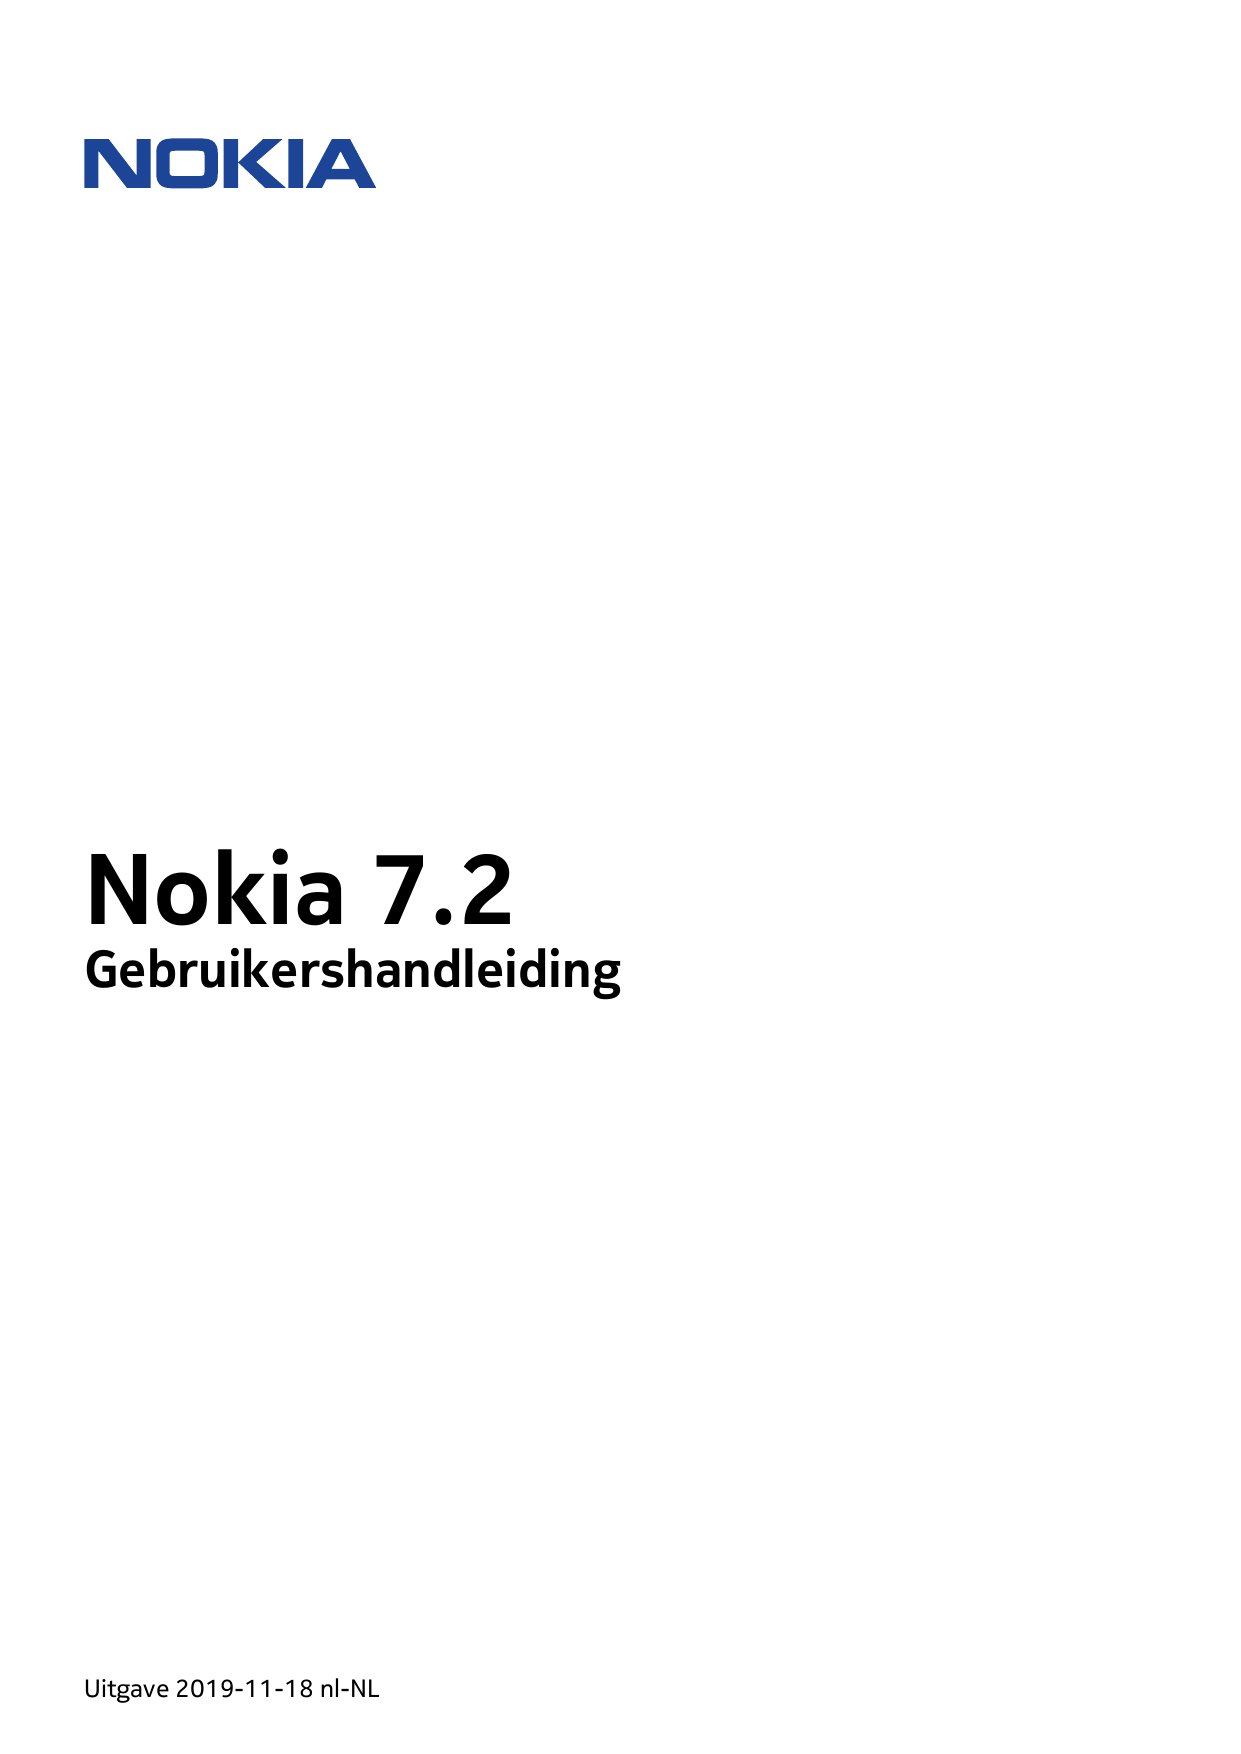 Nokia 7.2GebruikershandleidingUitgave 2019-11-18 nl-NL